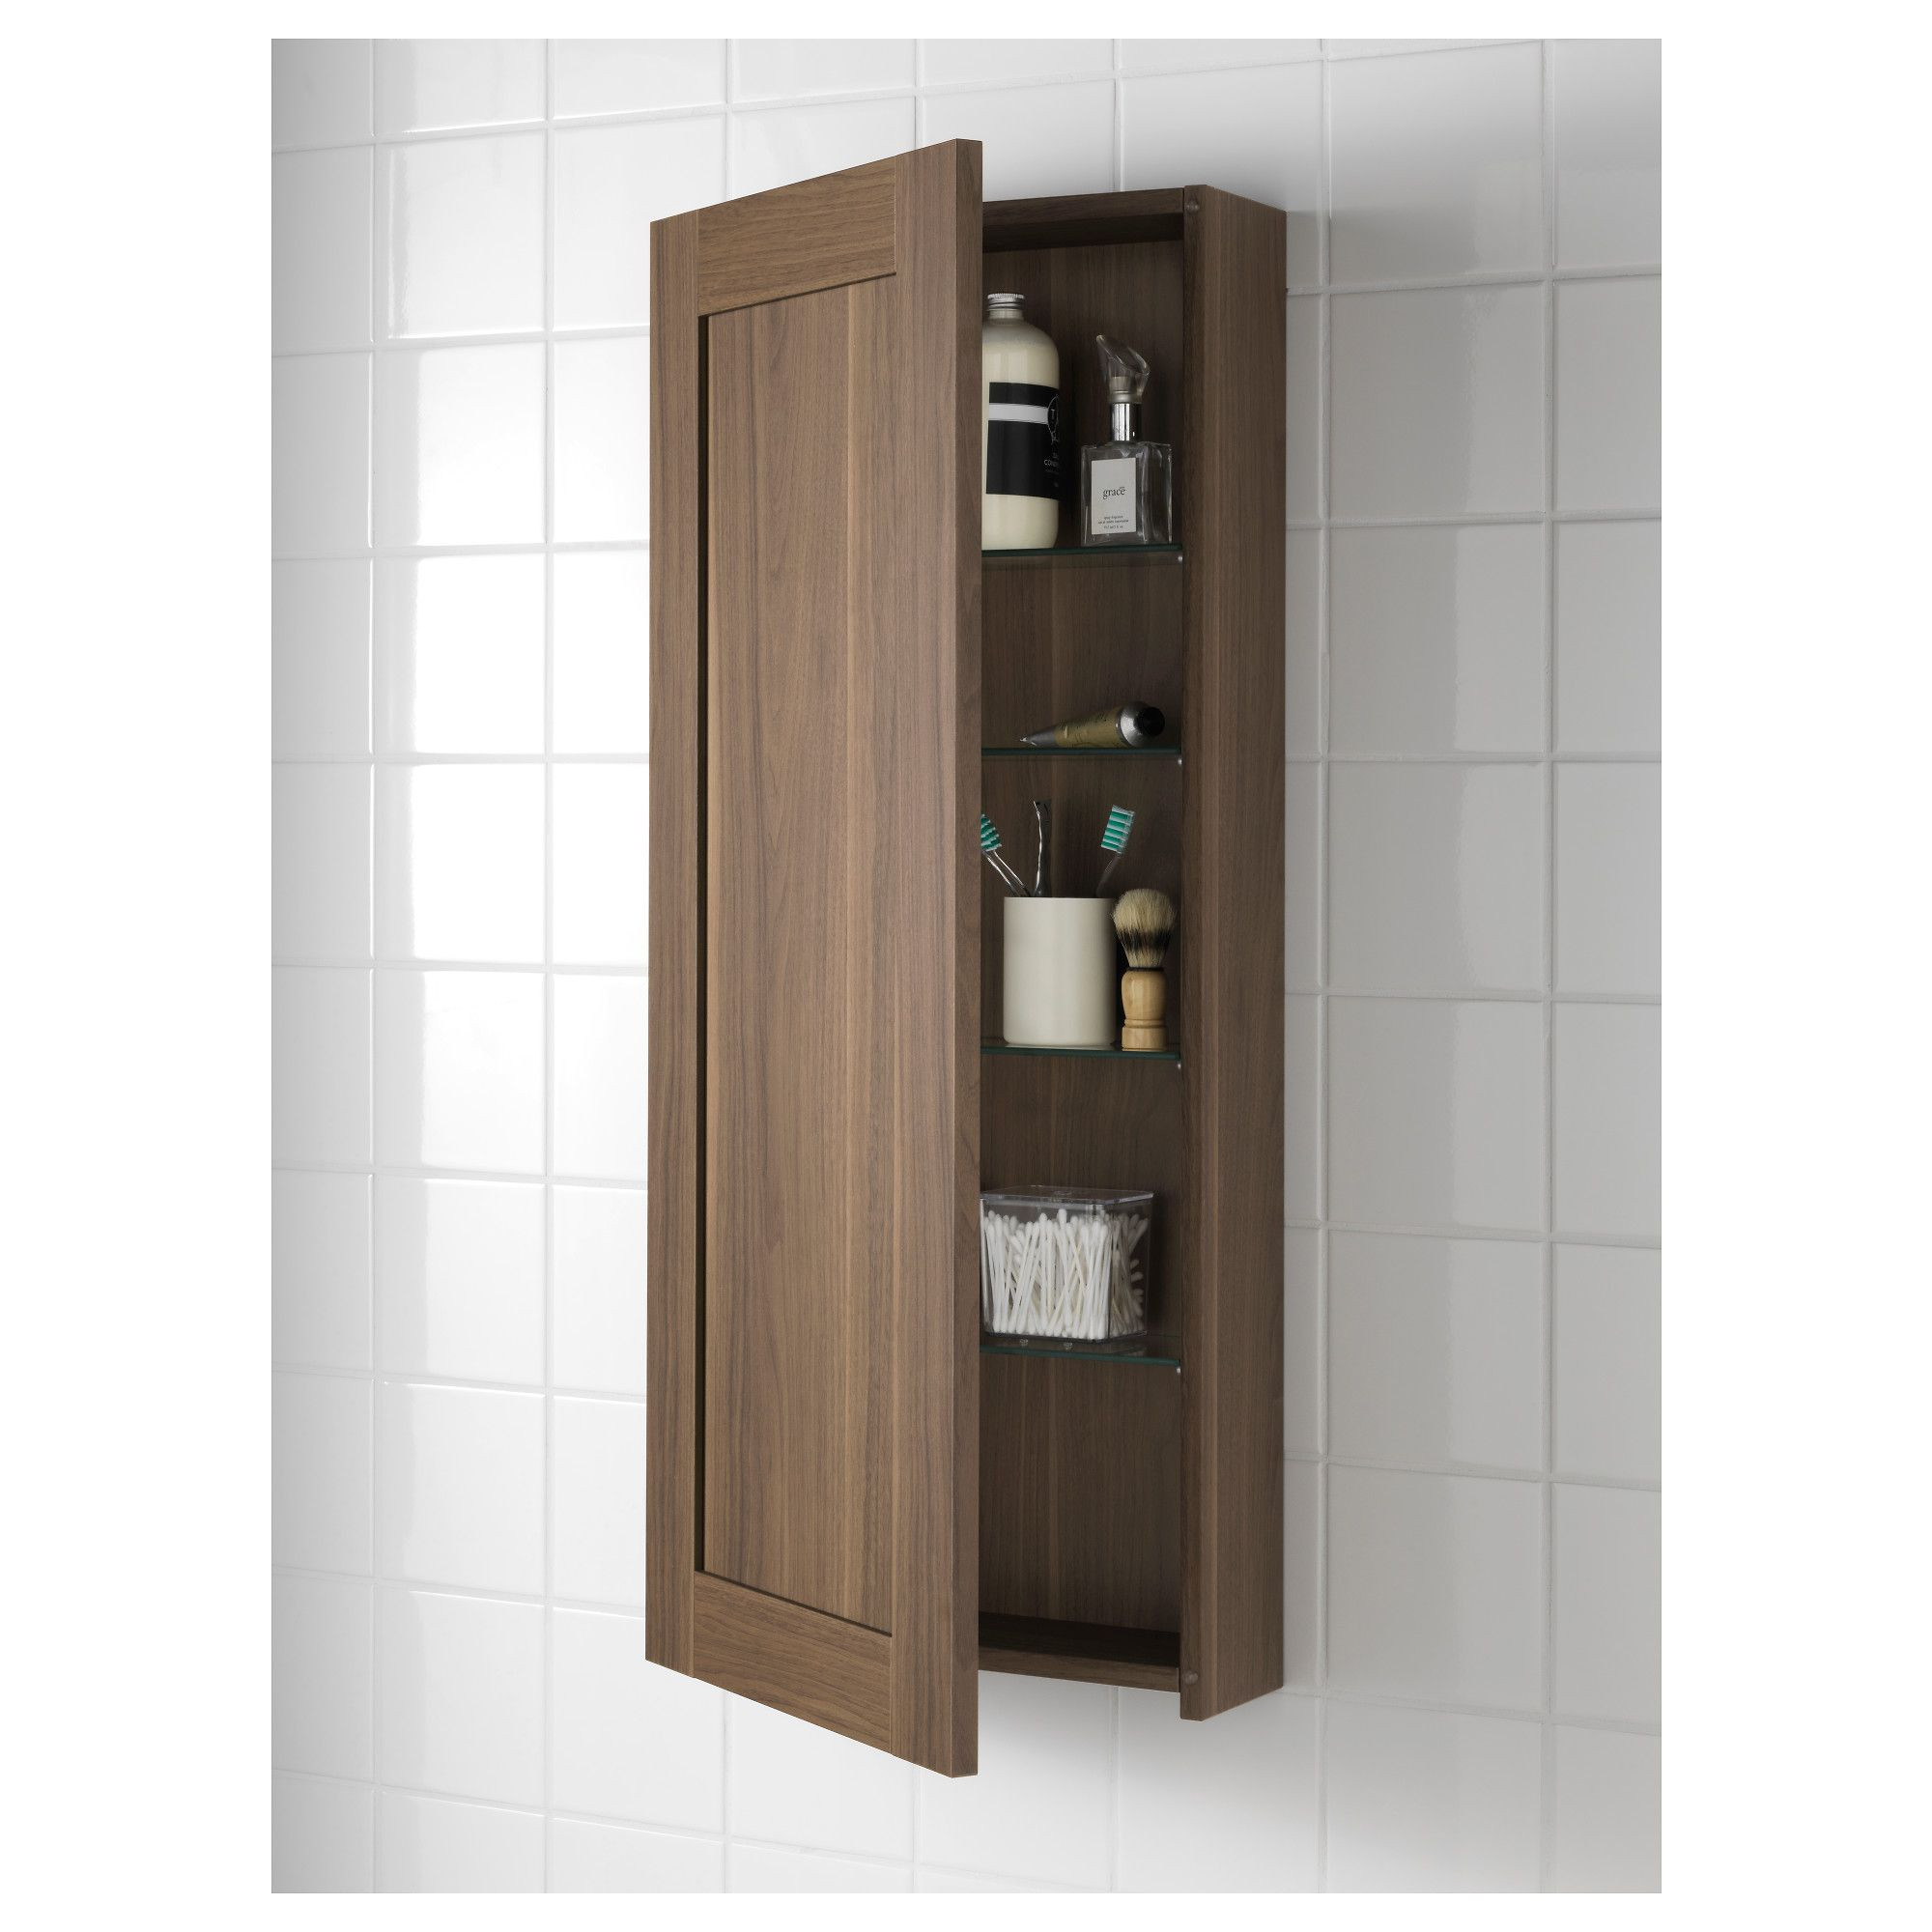 Ikea Bathroom Wall Cabinet
 Medicine Cabinets Ikea With images